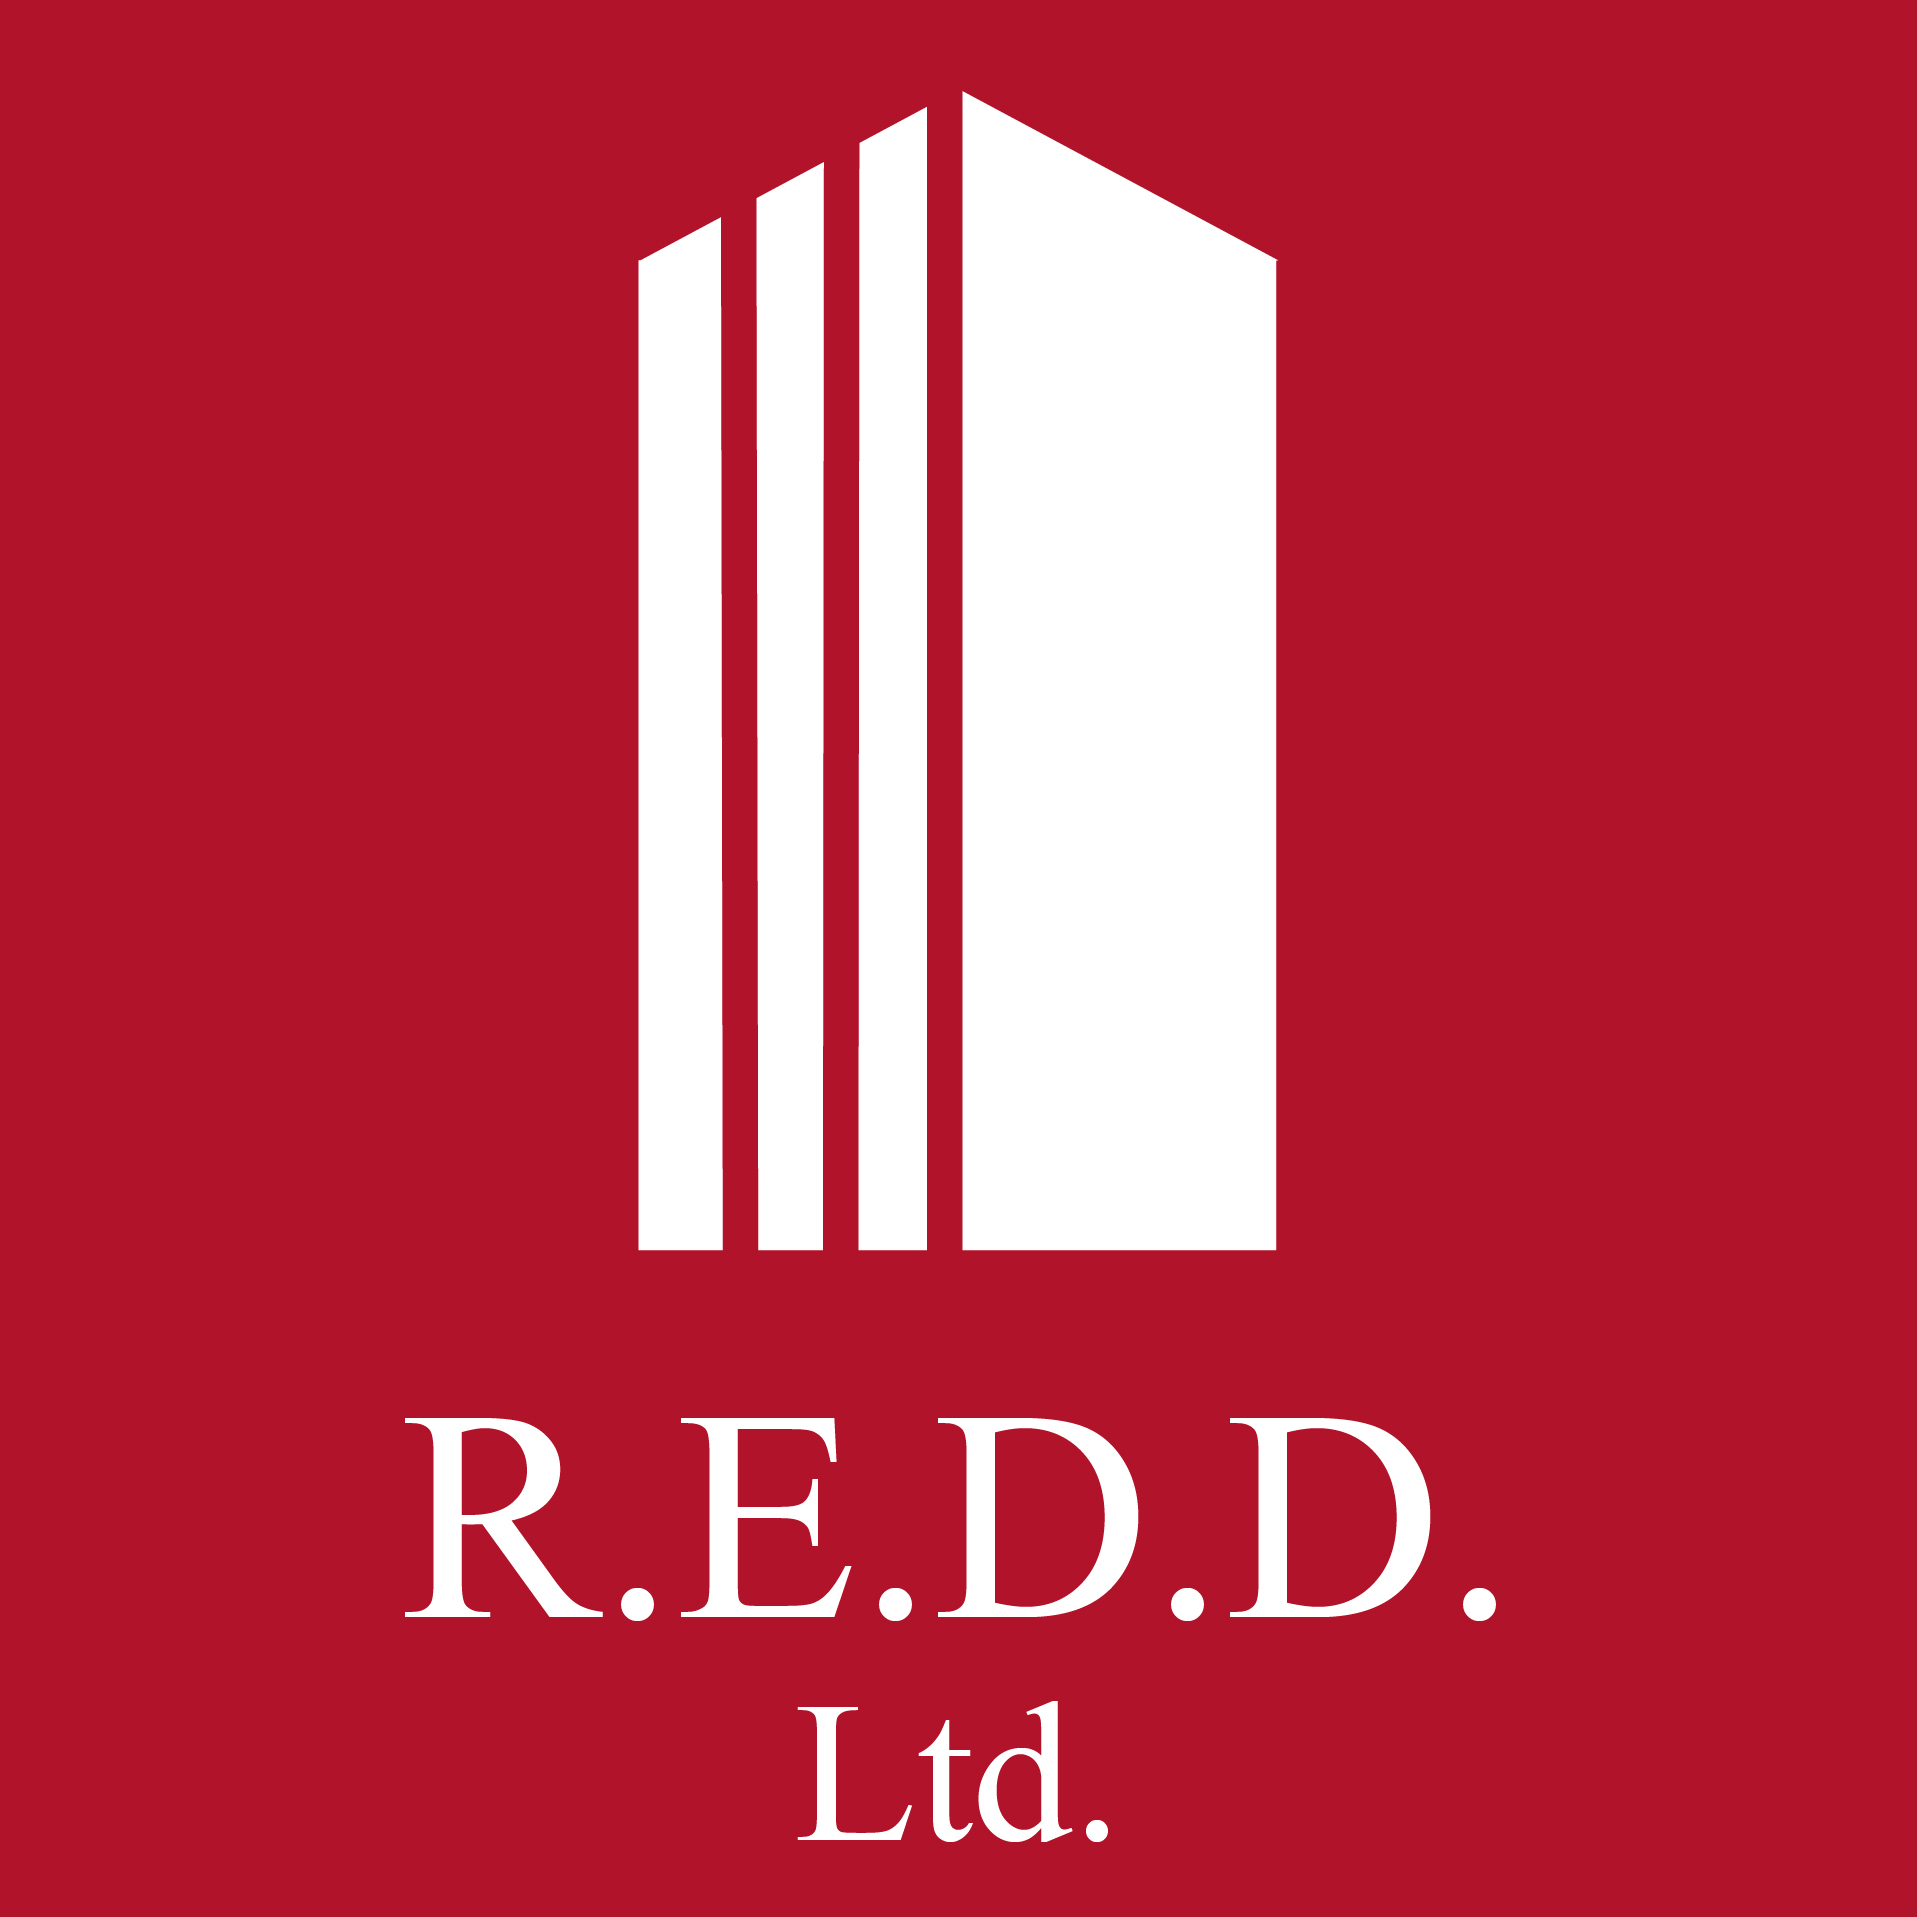 R.E.D.D. Real Estate Development Dynamics Ltd. in Berlin